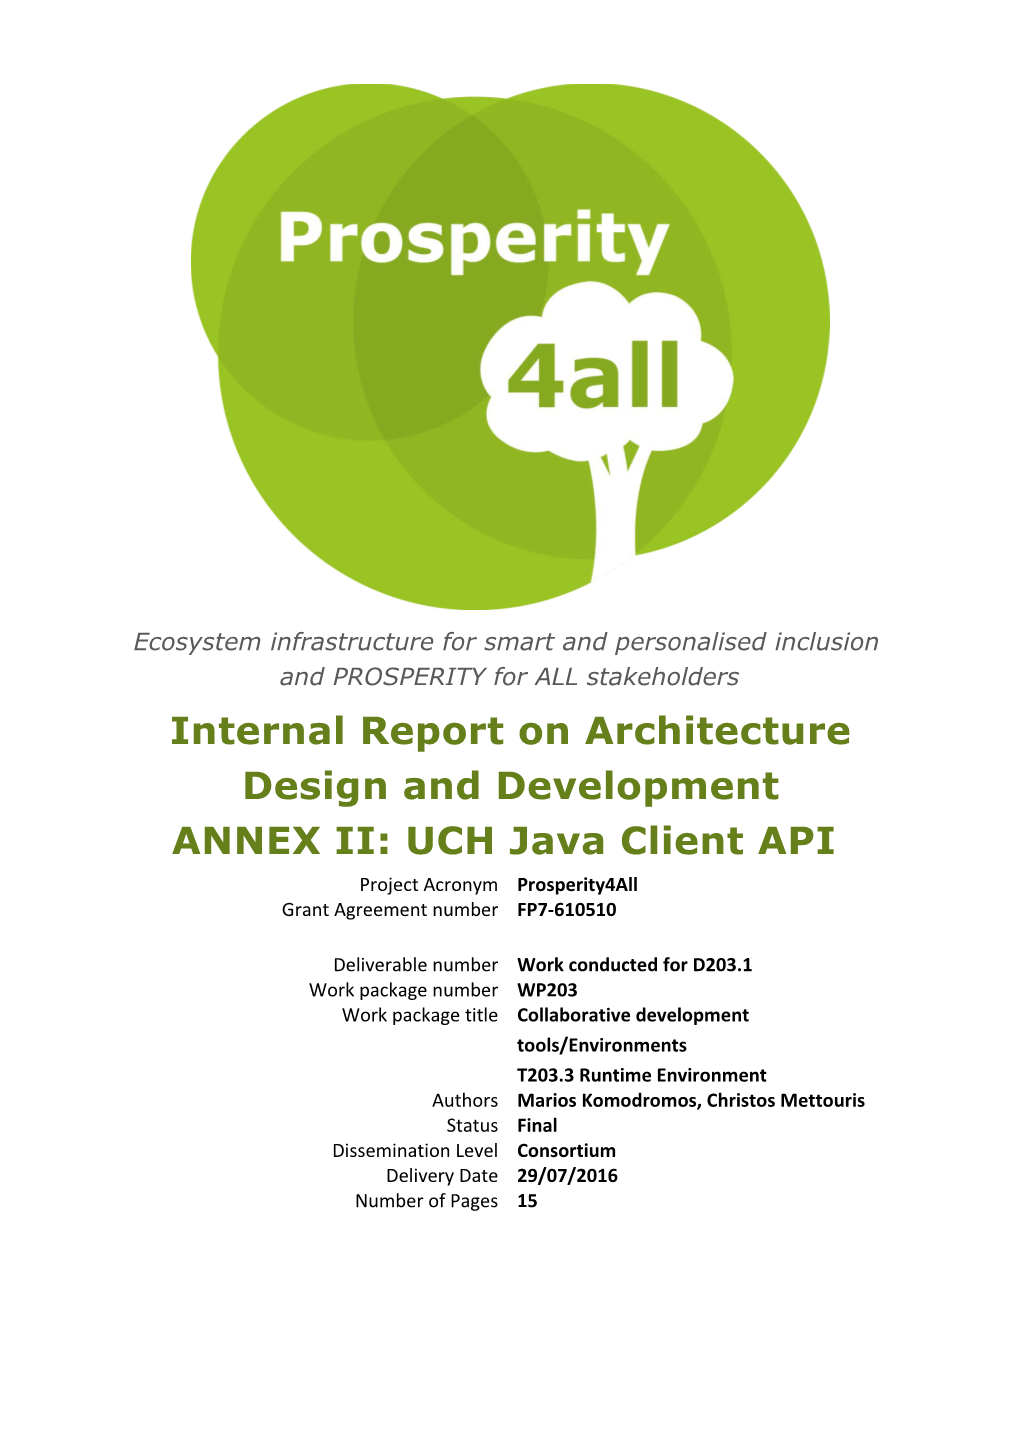 Internal Report on Architecture Design and Development